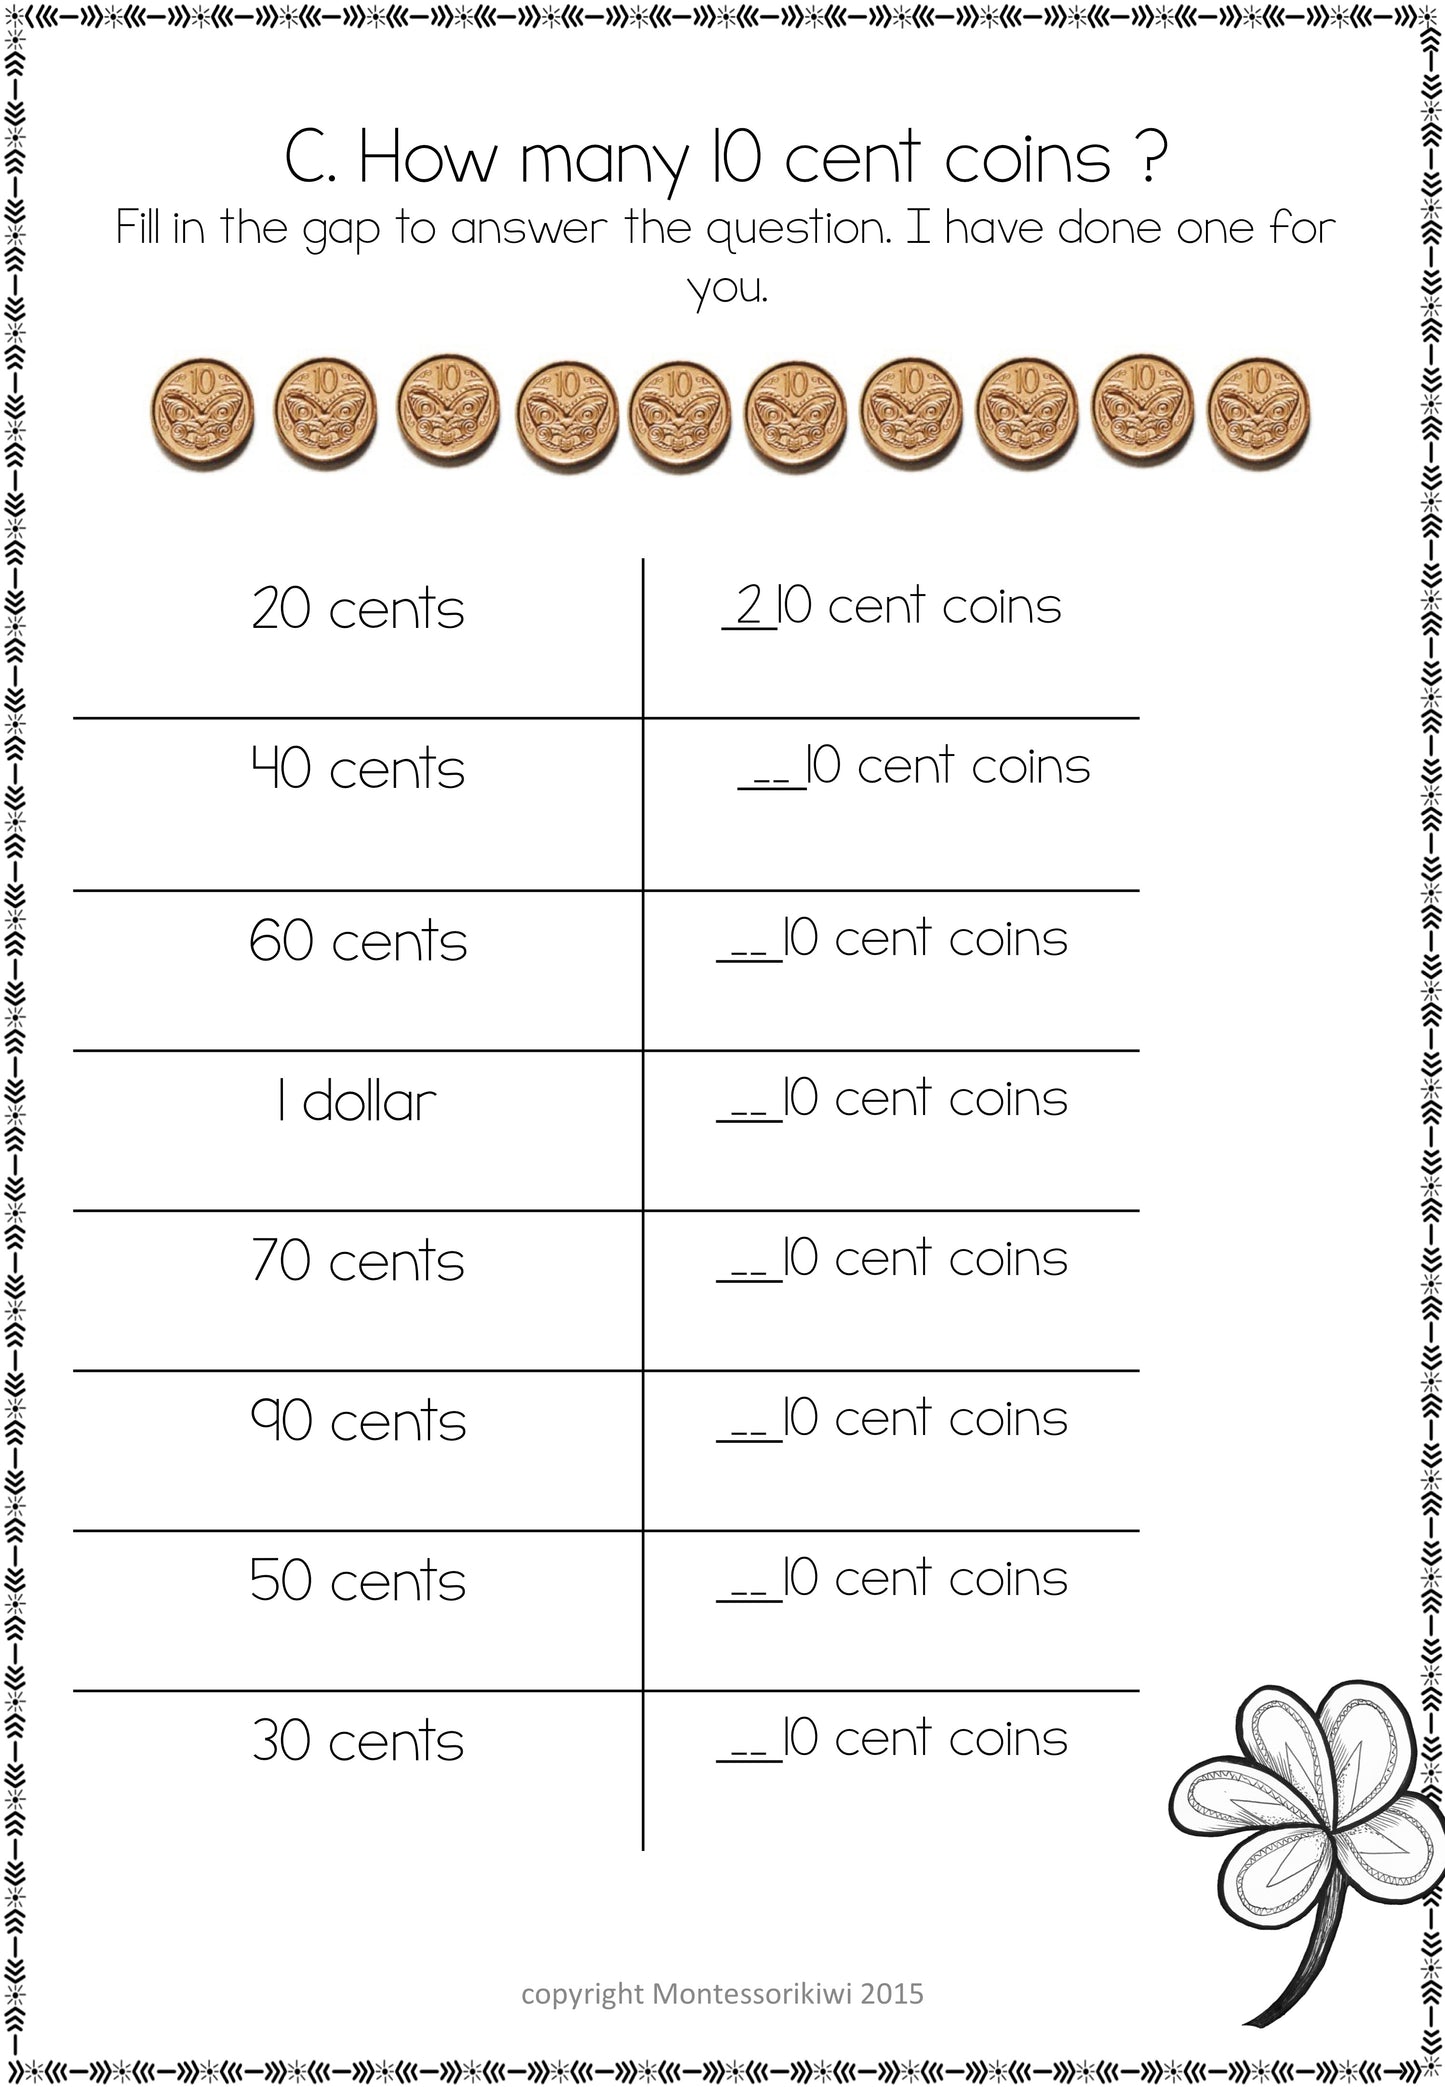 New Zealand Money Level 1:  How many 10 cent coins equal - montessorikiwi